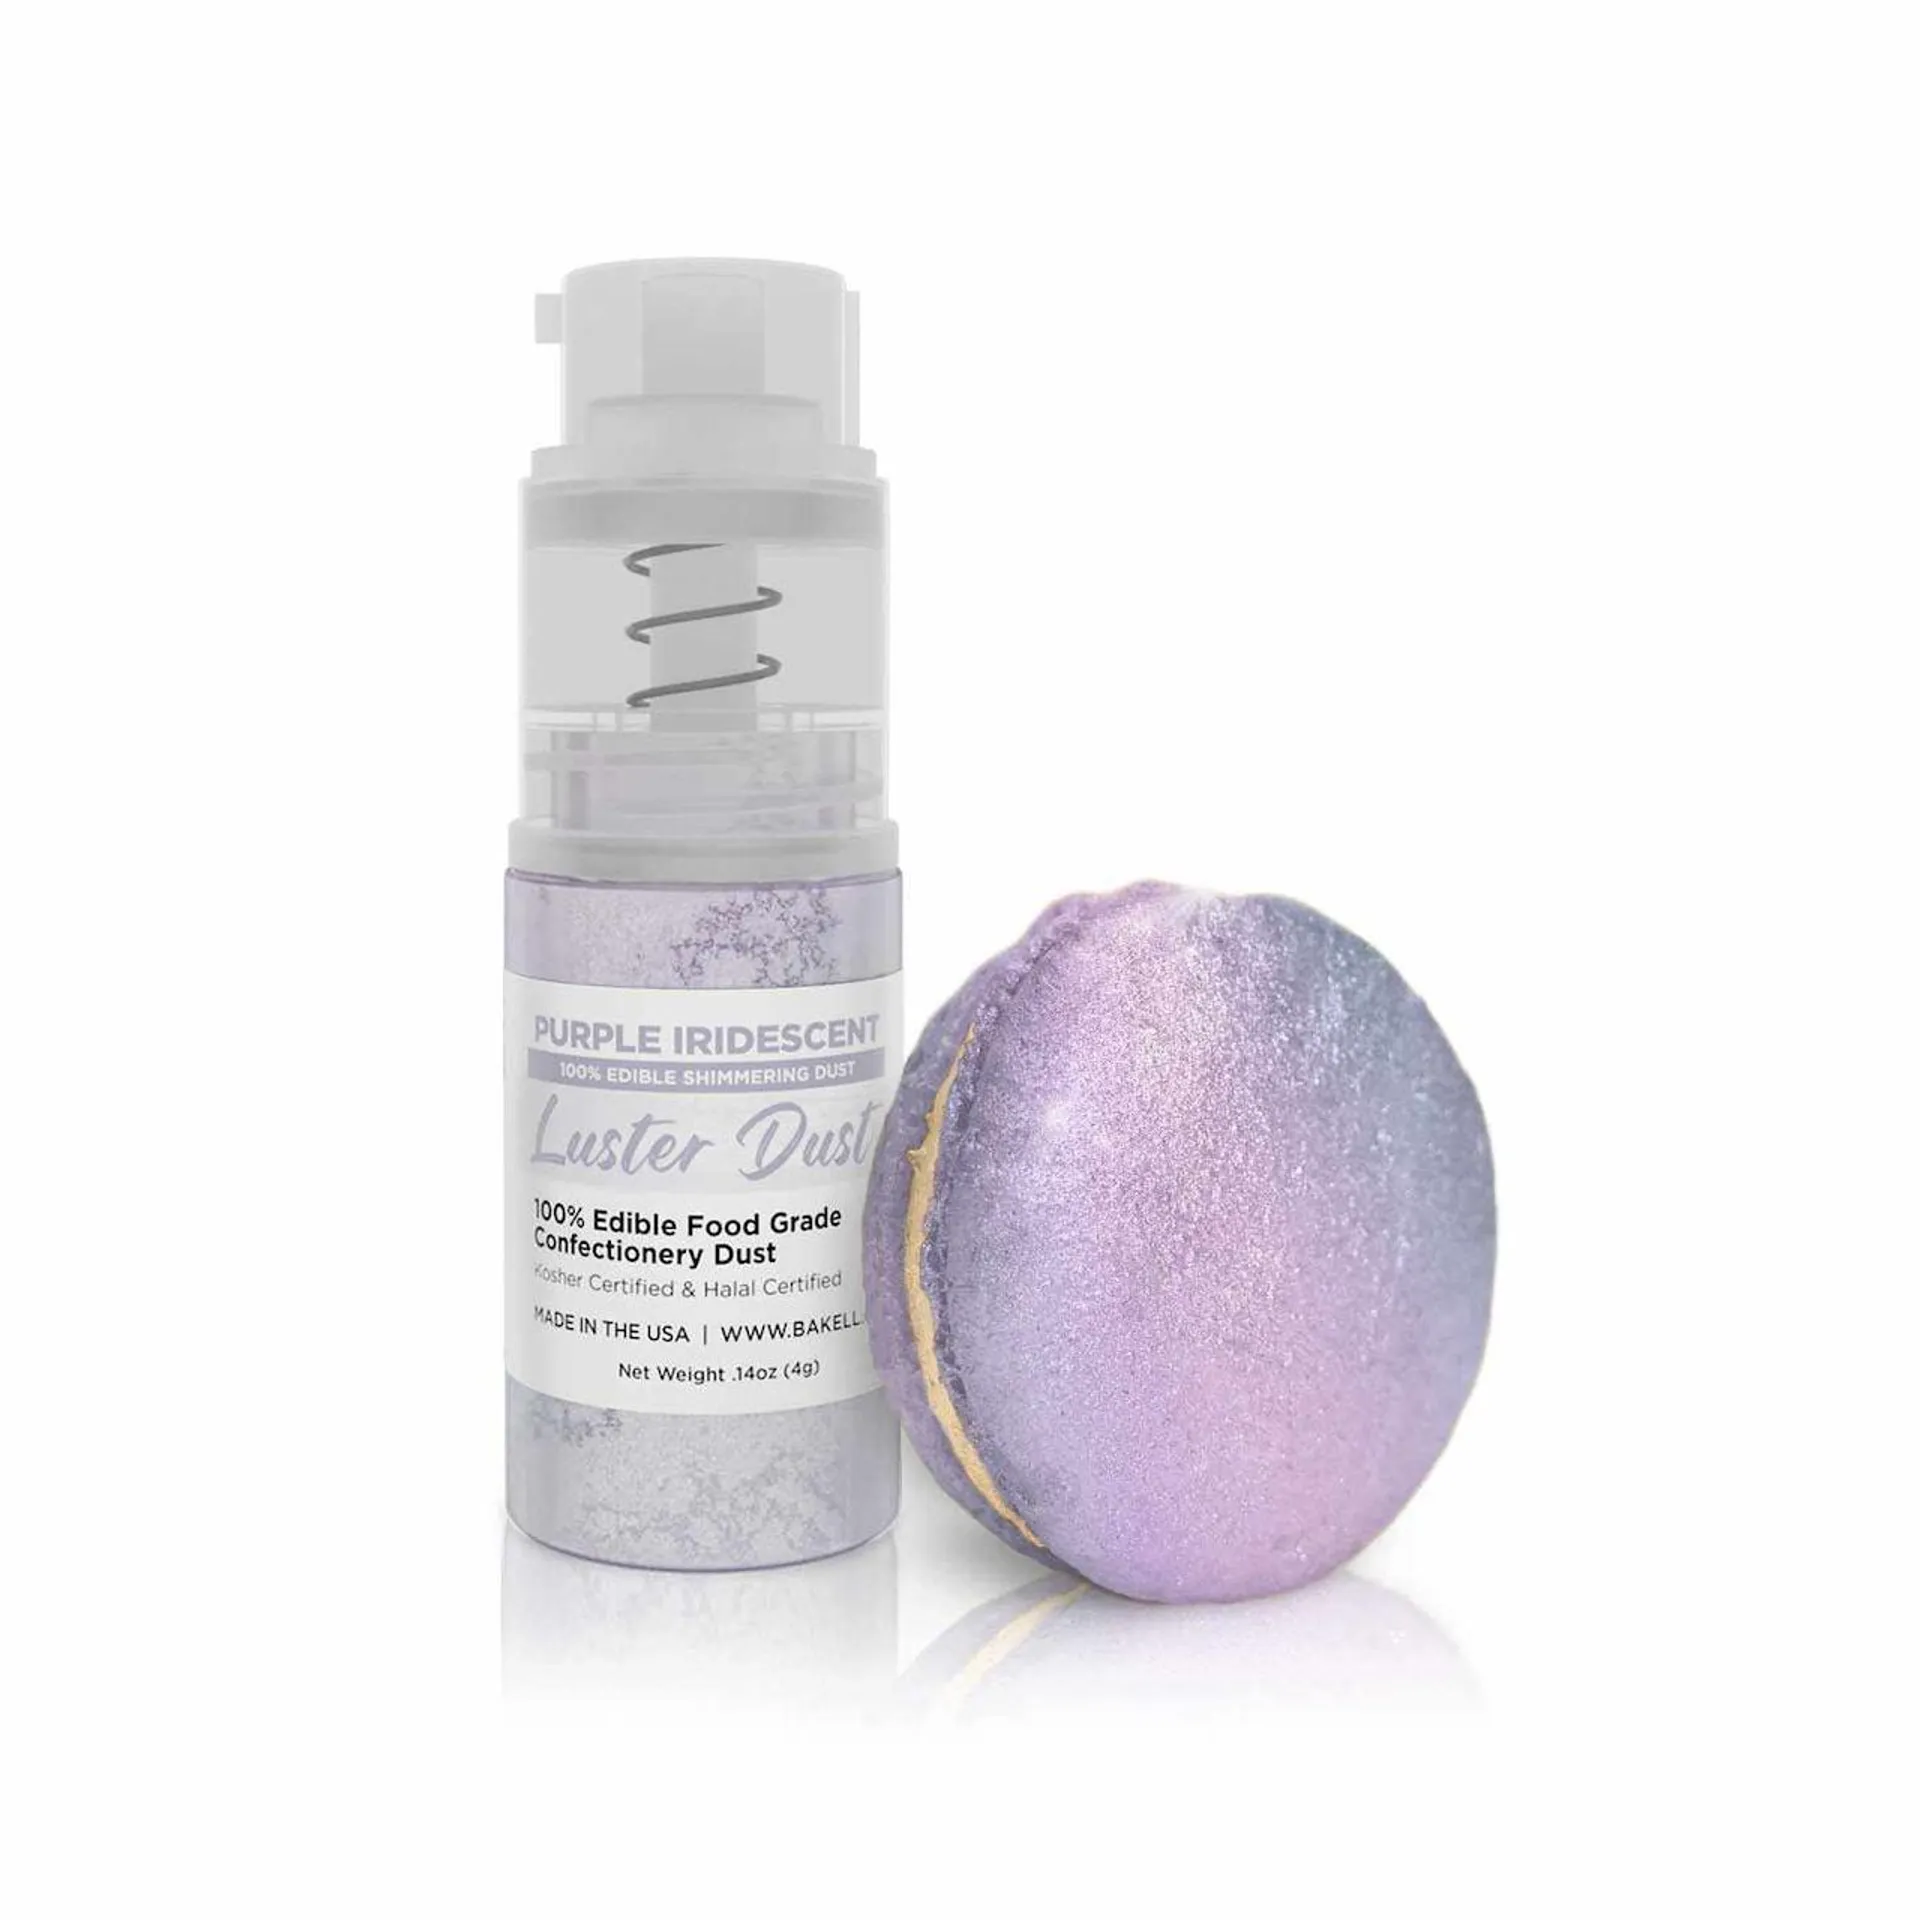 Purple Iridescent Luster Dust Spray | Luster Dust Edible Glitter Spray Dust for Cakes, Cookies, Desserts, Paint. FDA Compliant (4 Gram Pump)